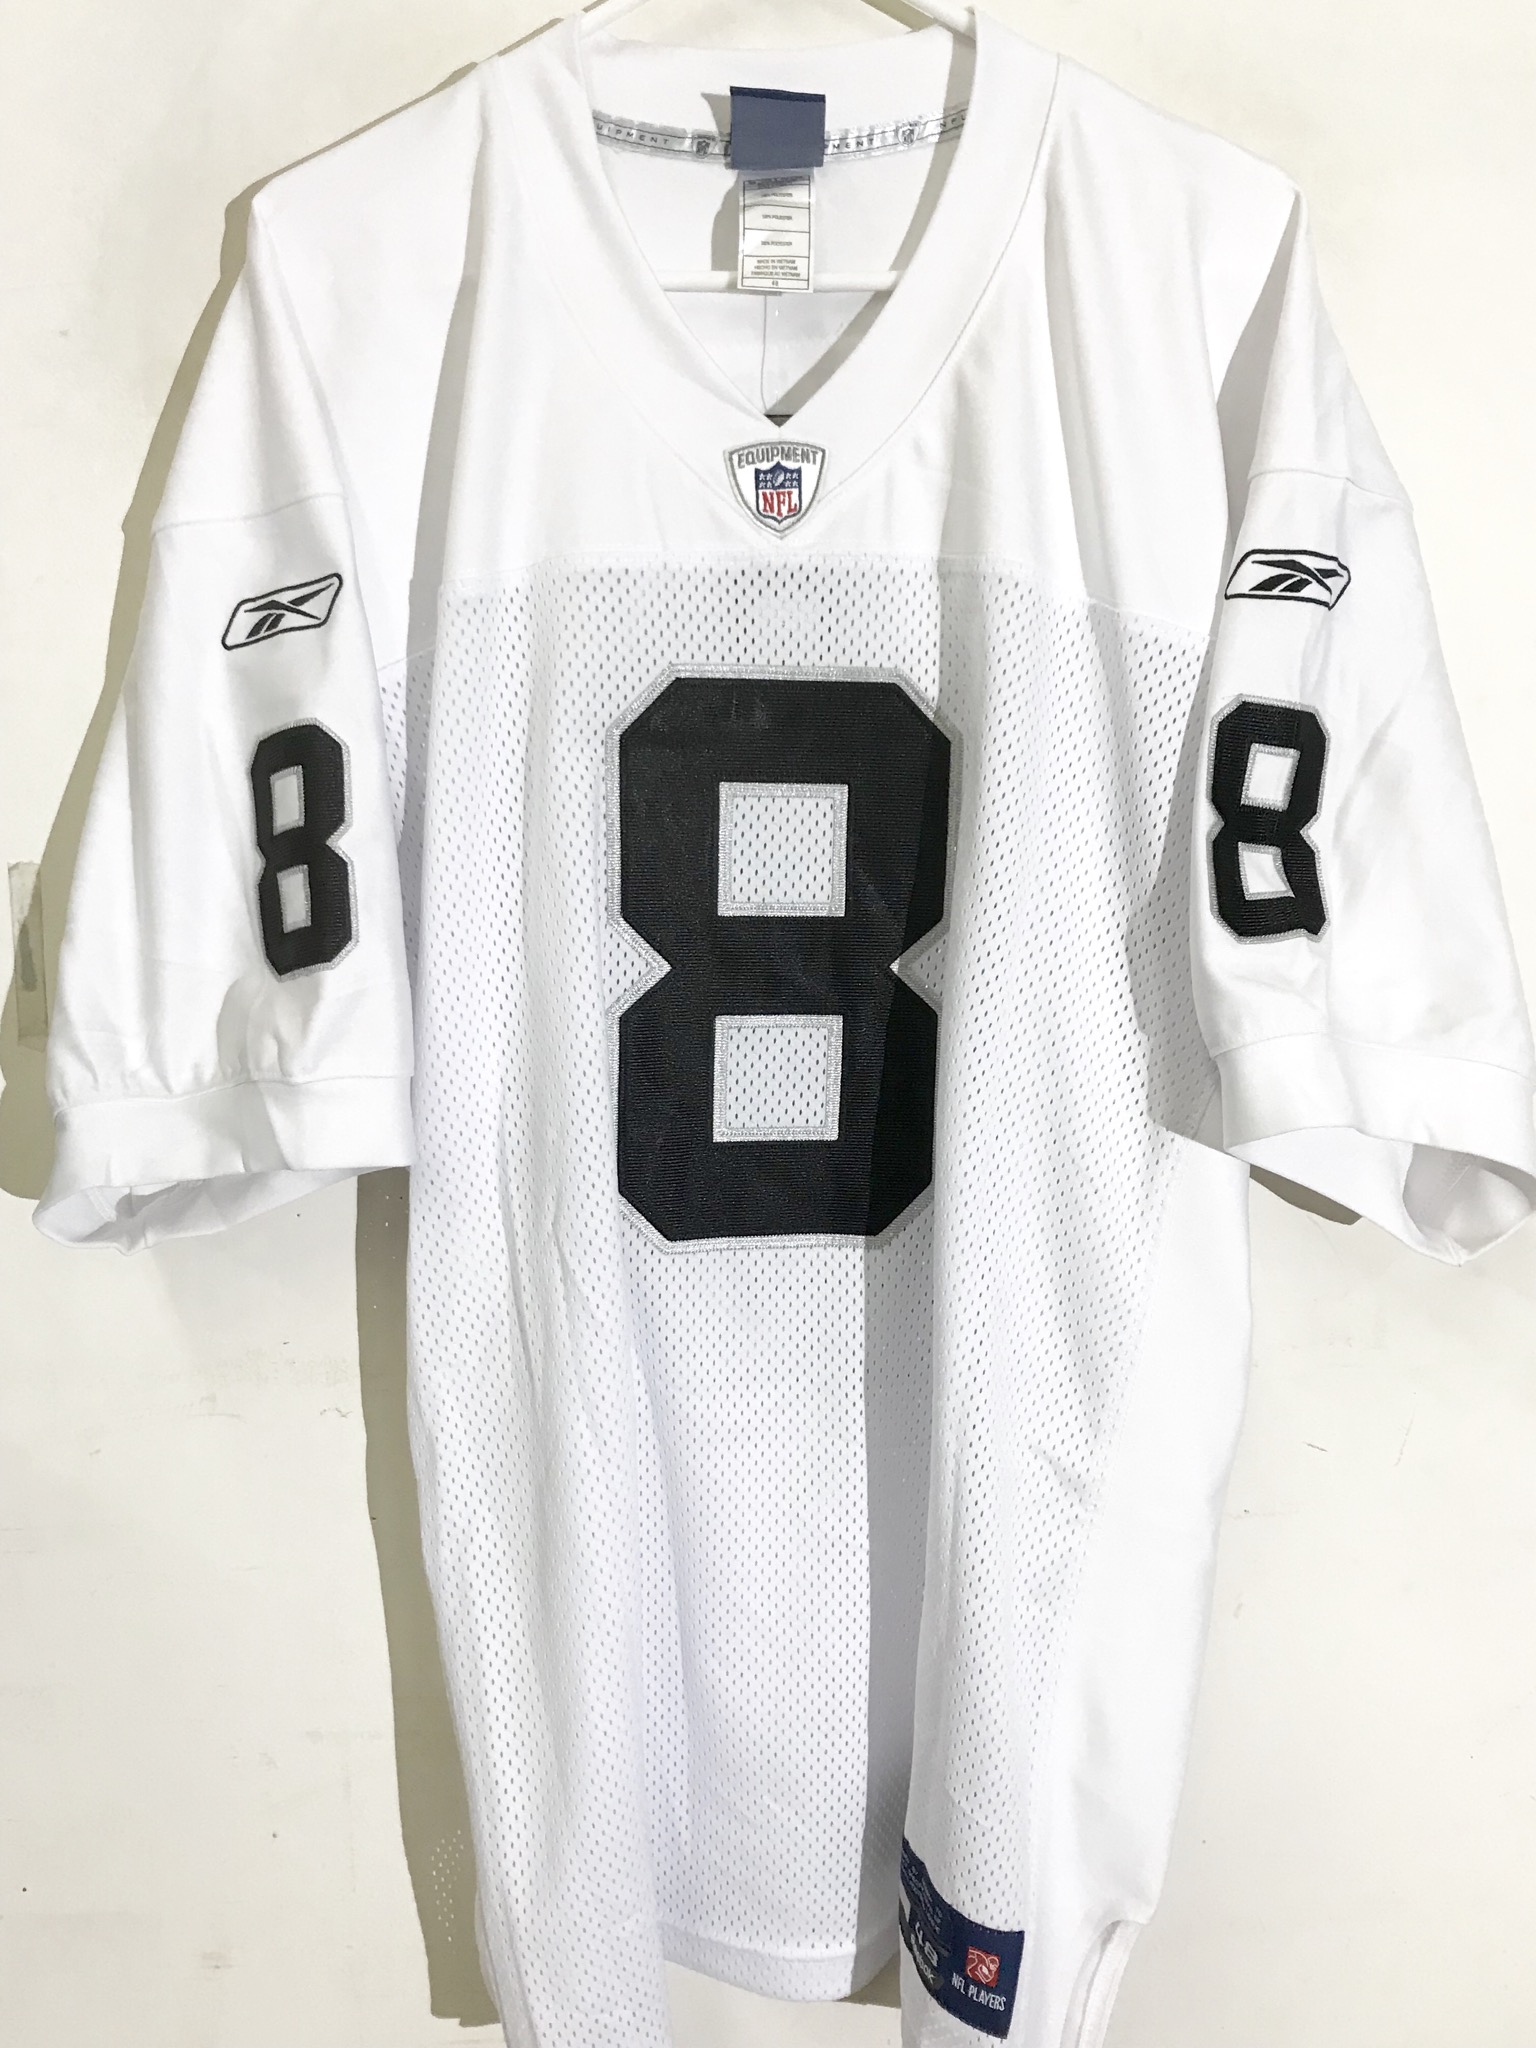 Reebok Authentic NFL Jersey Oakland Raiders Ray Guy White sz 54 | eBay